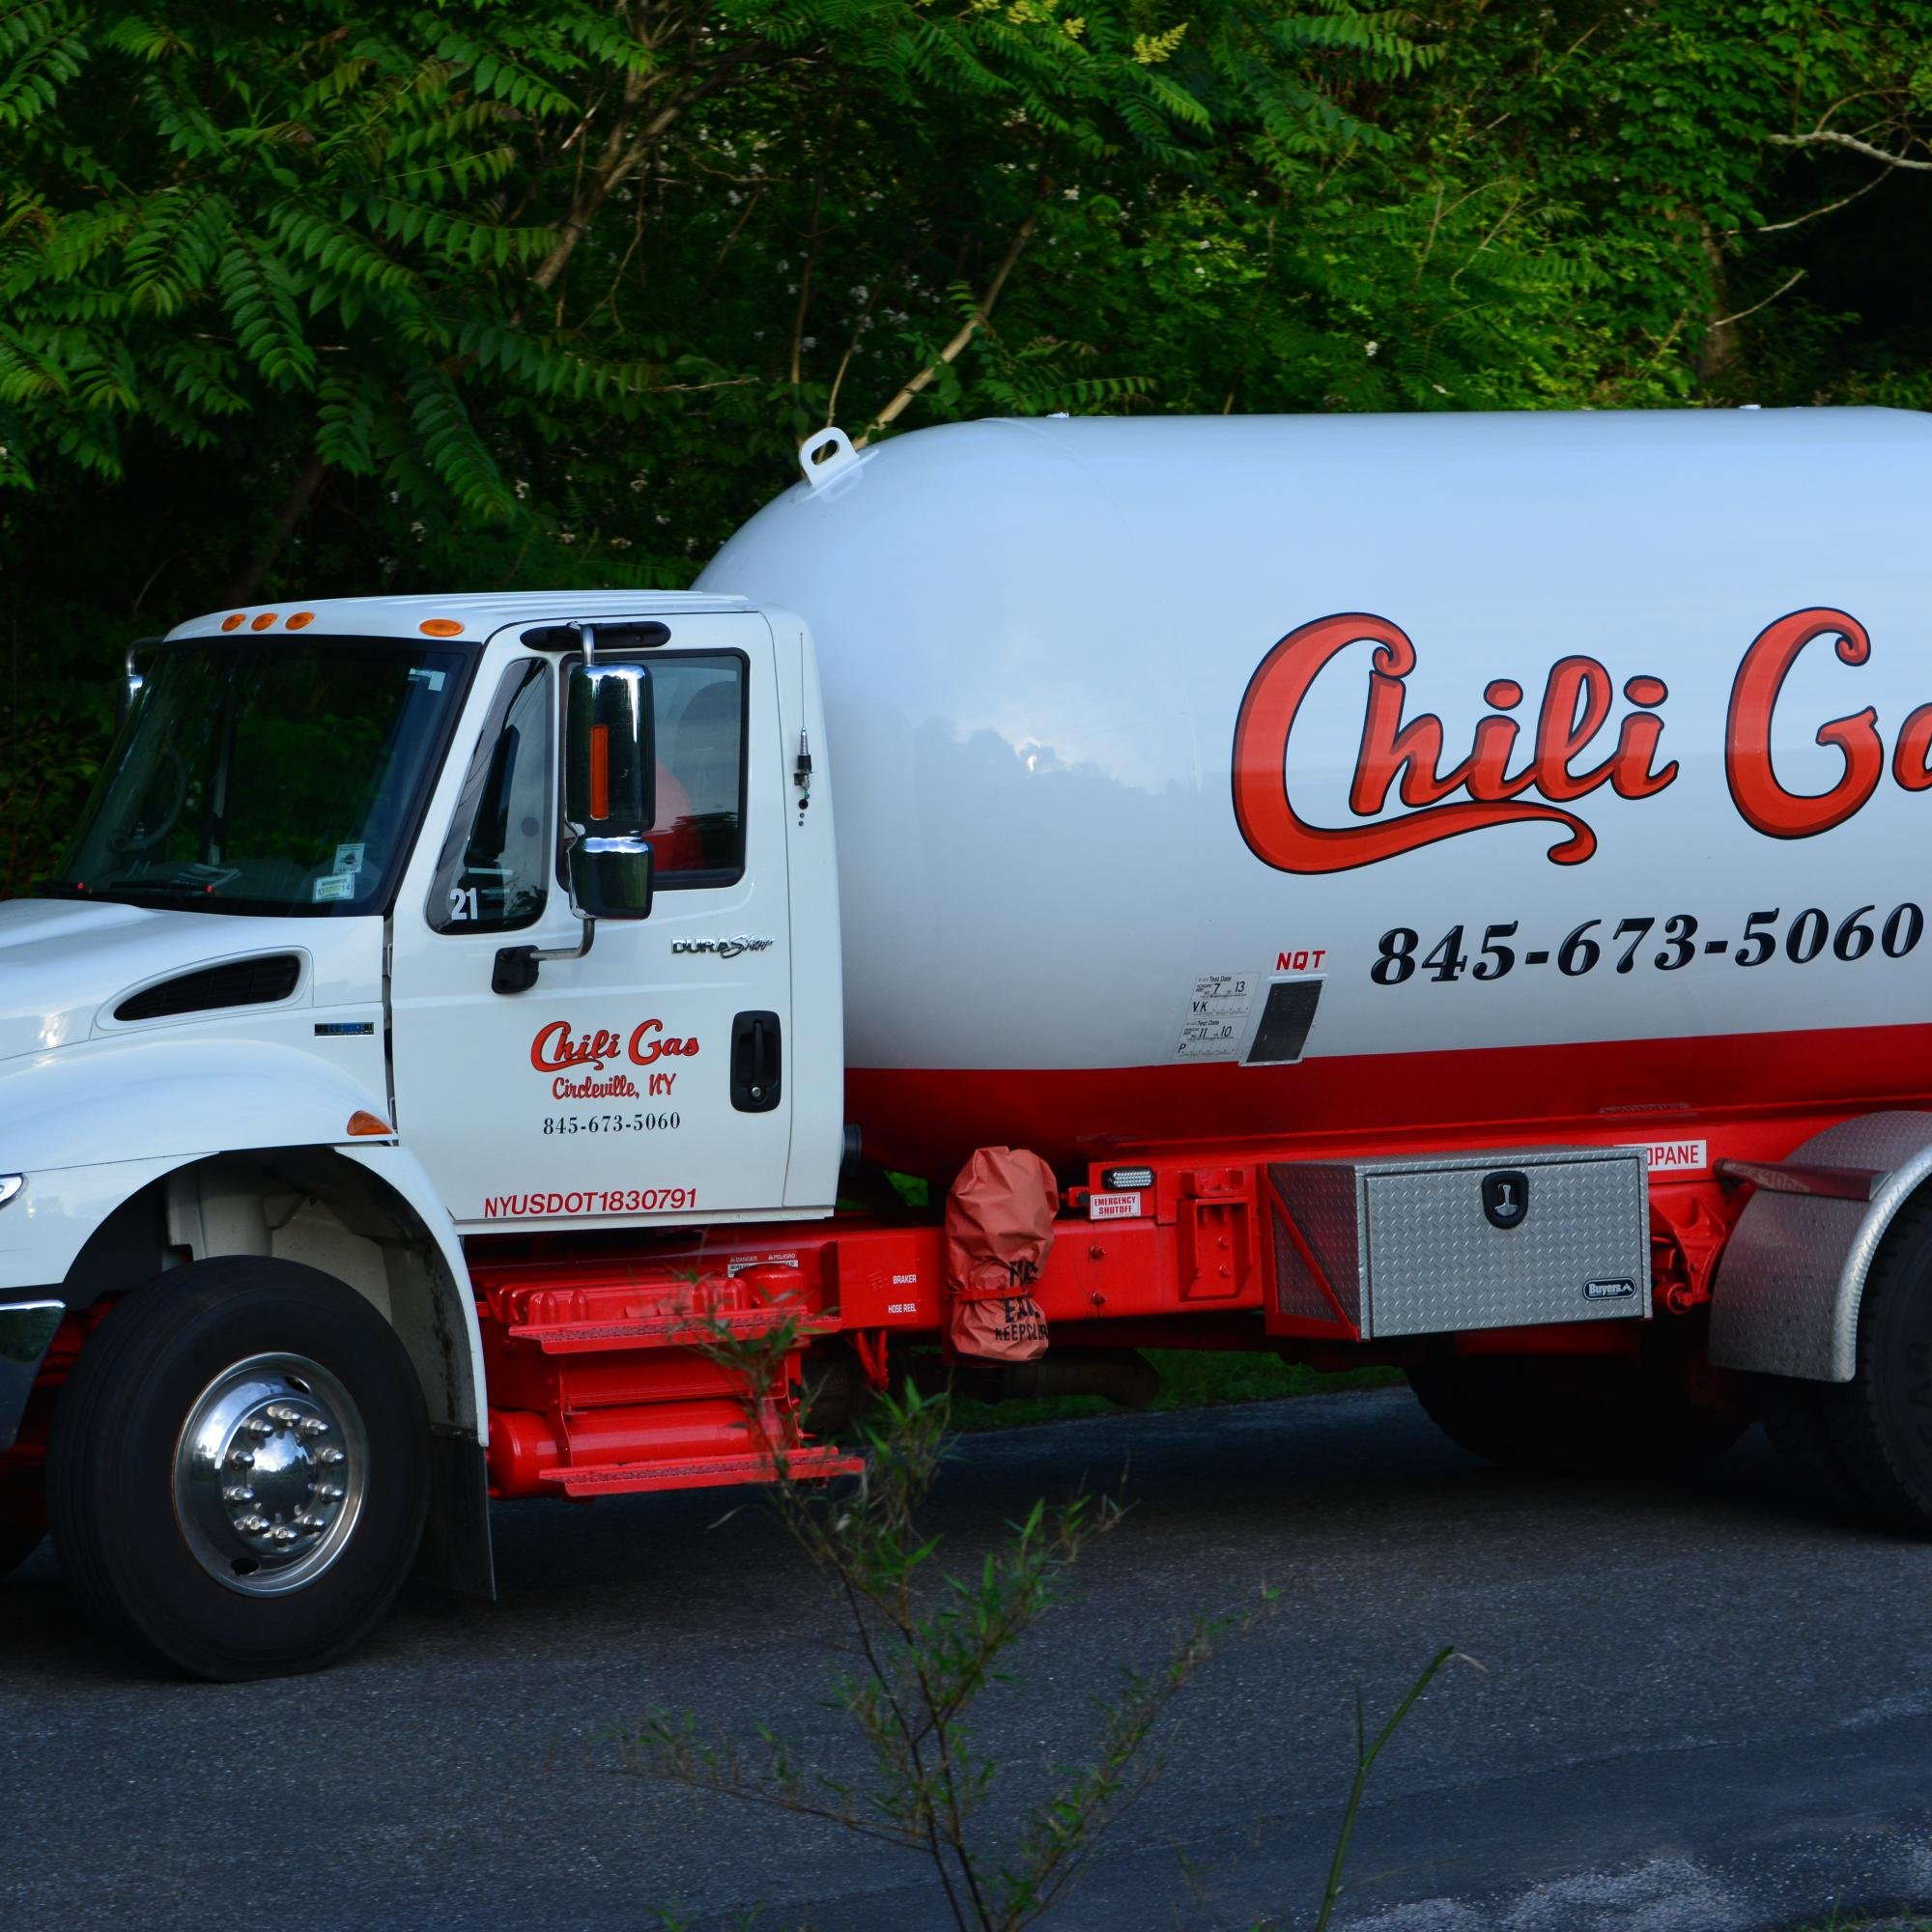 Propane Gas Company Servicing Orange County New York Customers